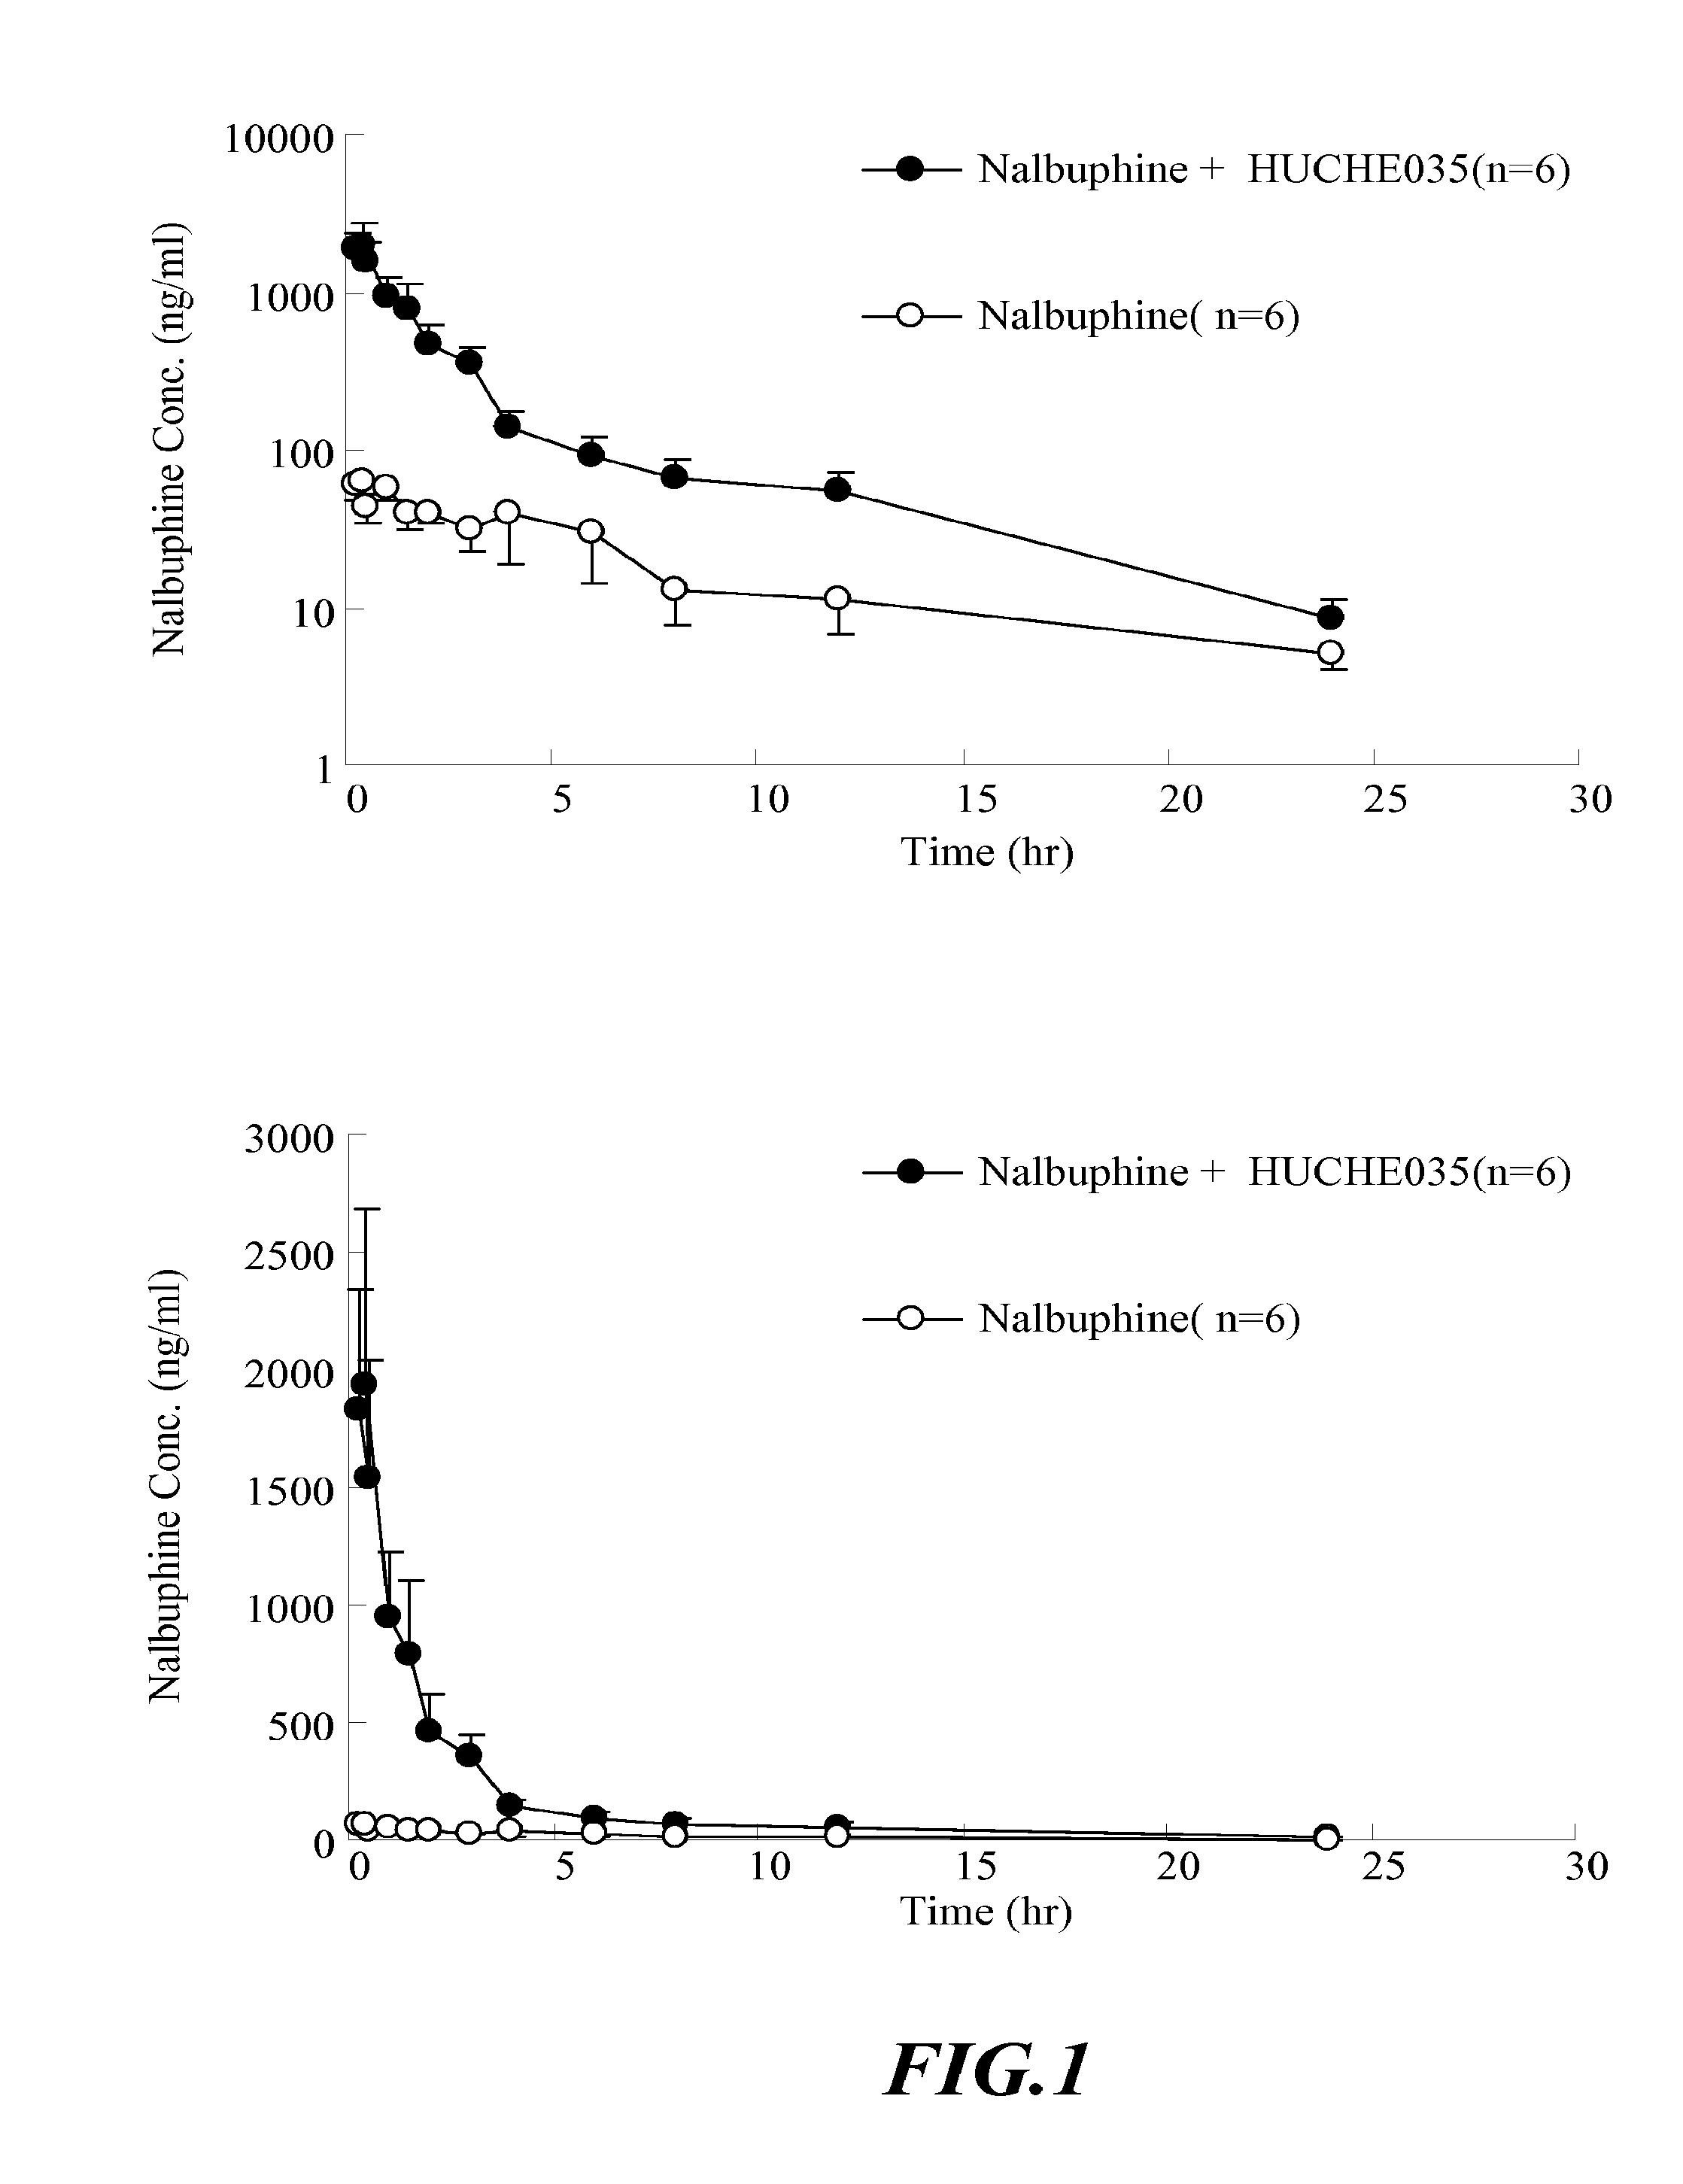 Inhibitors and enhancers of uridine diphosphate-glucuronosyltransferase 2b (UGT2B)